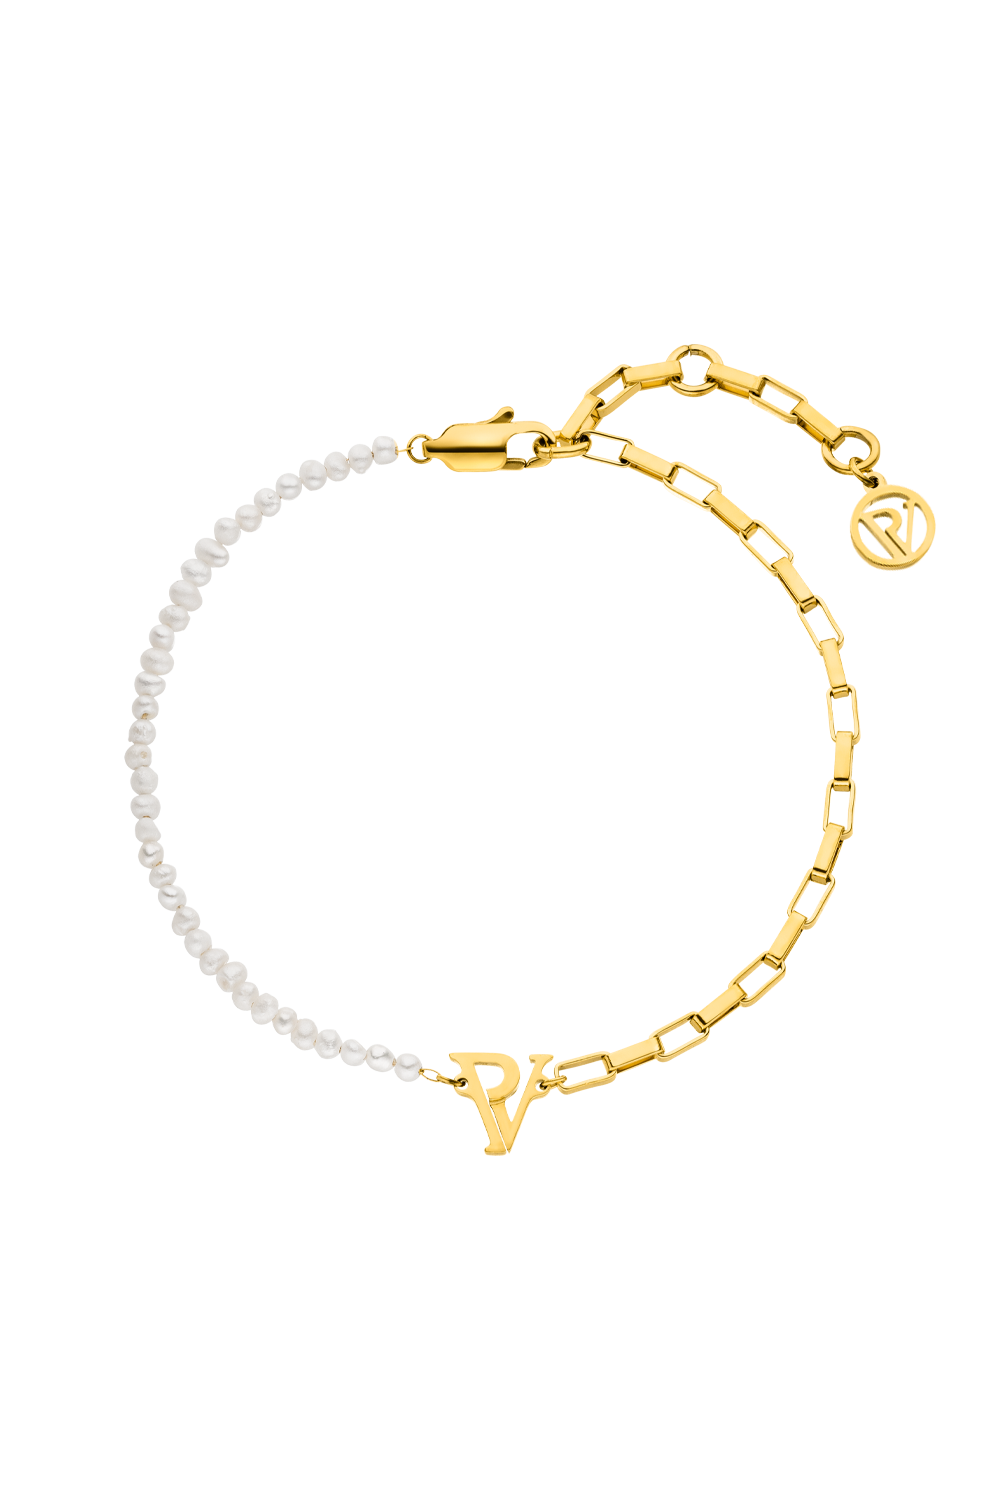 LOUIS VUITTON Women's Bracelet/Wristband in Gold